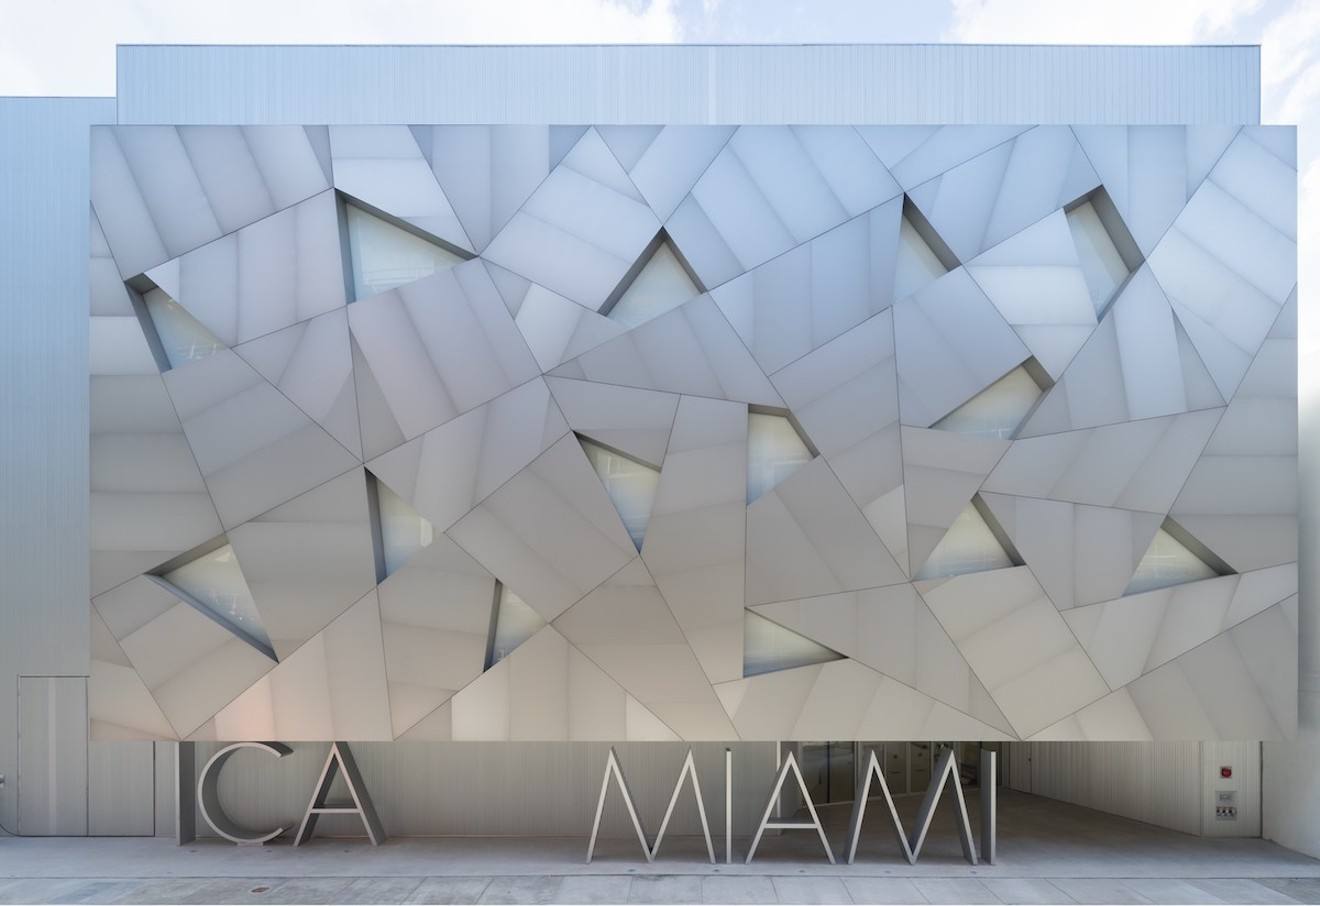 The Institute of Contemporary Art, Miami